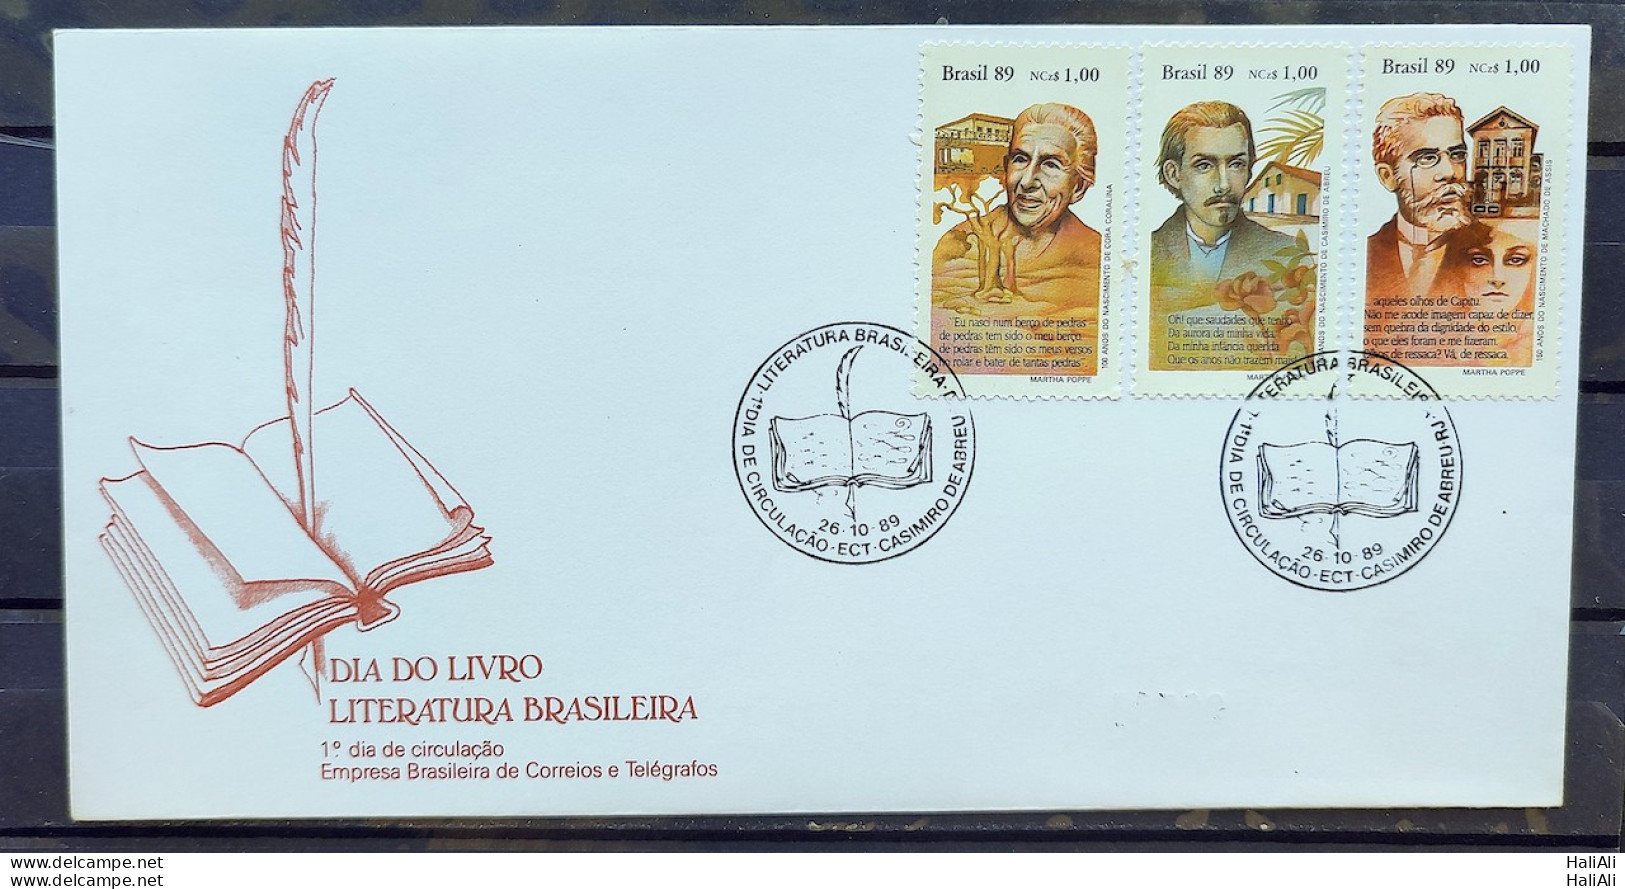 Brazil Envelope FDC 482 1989 Writers Cora Coralina Casimiro De Abreu Machado De Assis Literature CBC RJ 02 - FDC